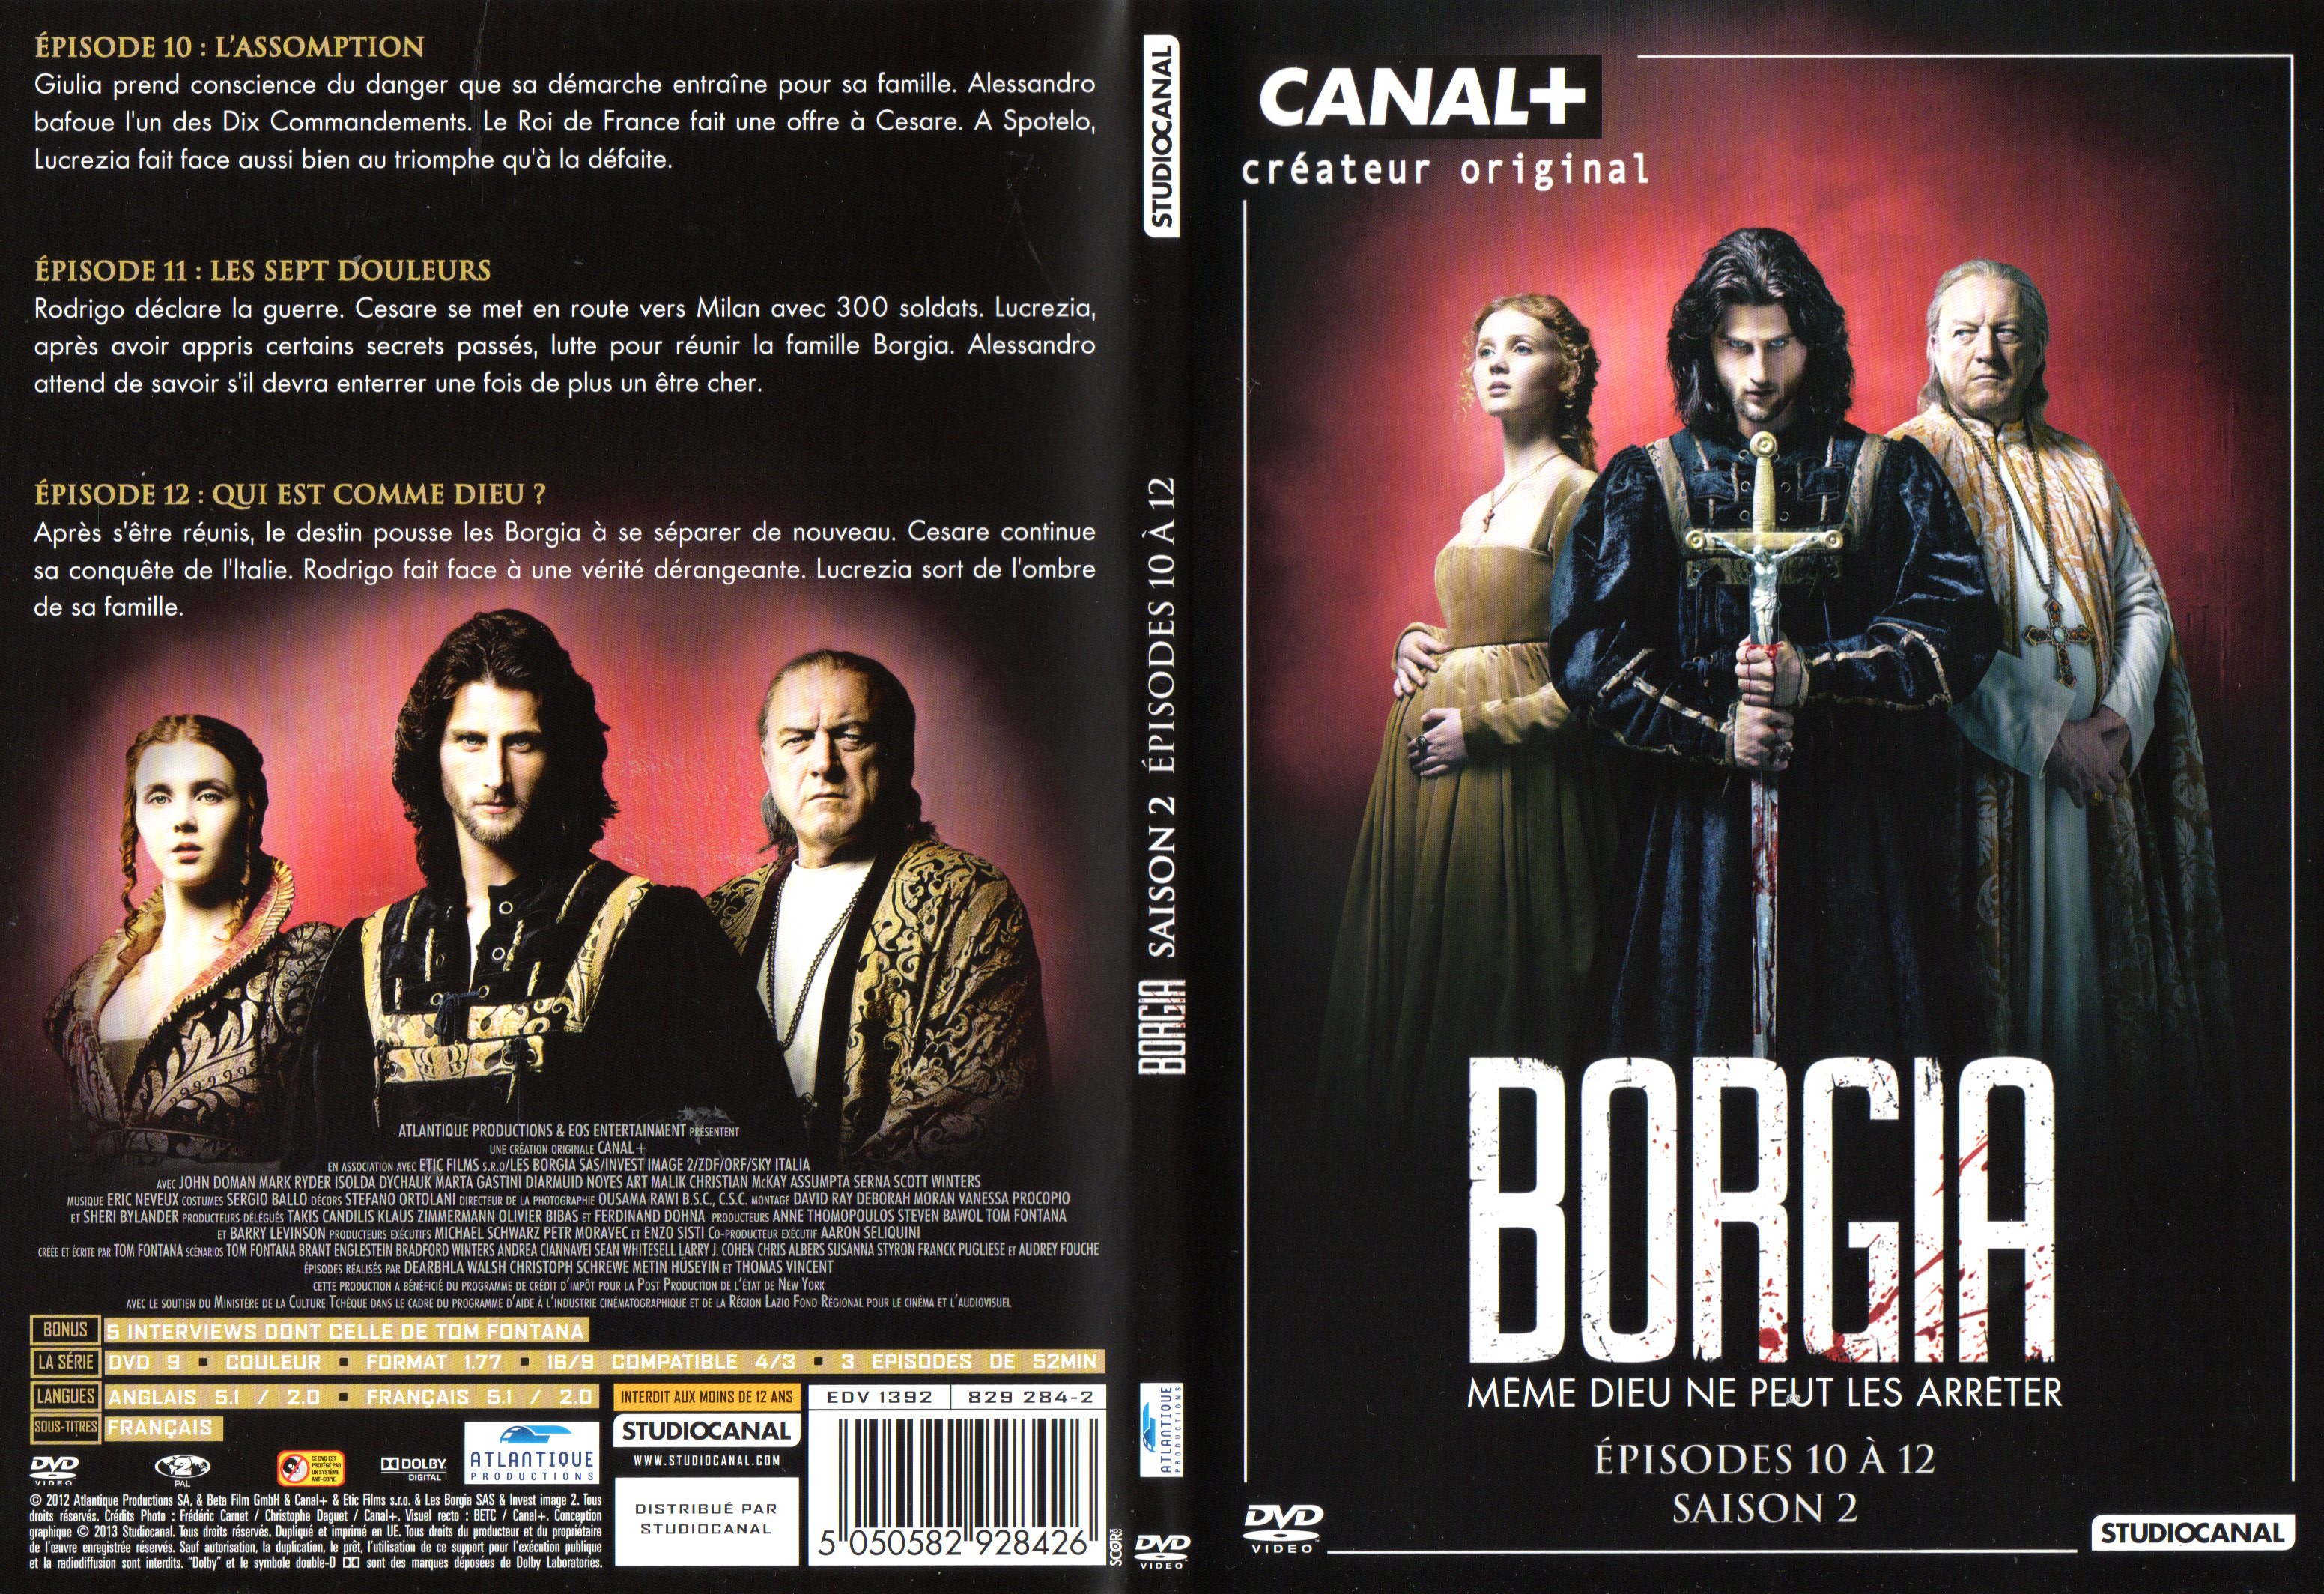 Jaquette DVD Borgia Saison 2 DVD 4